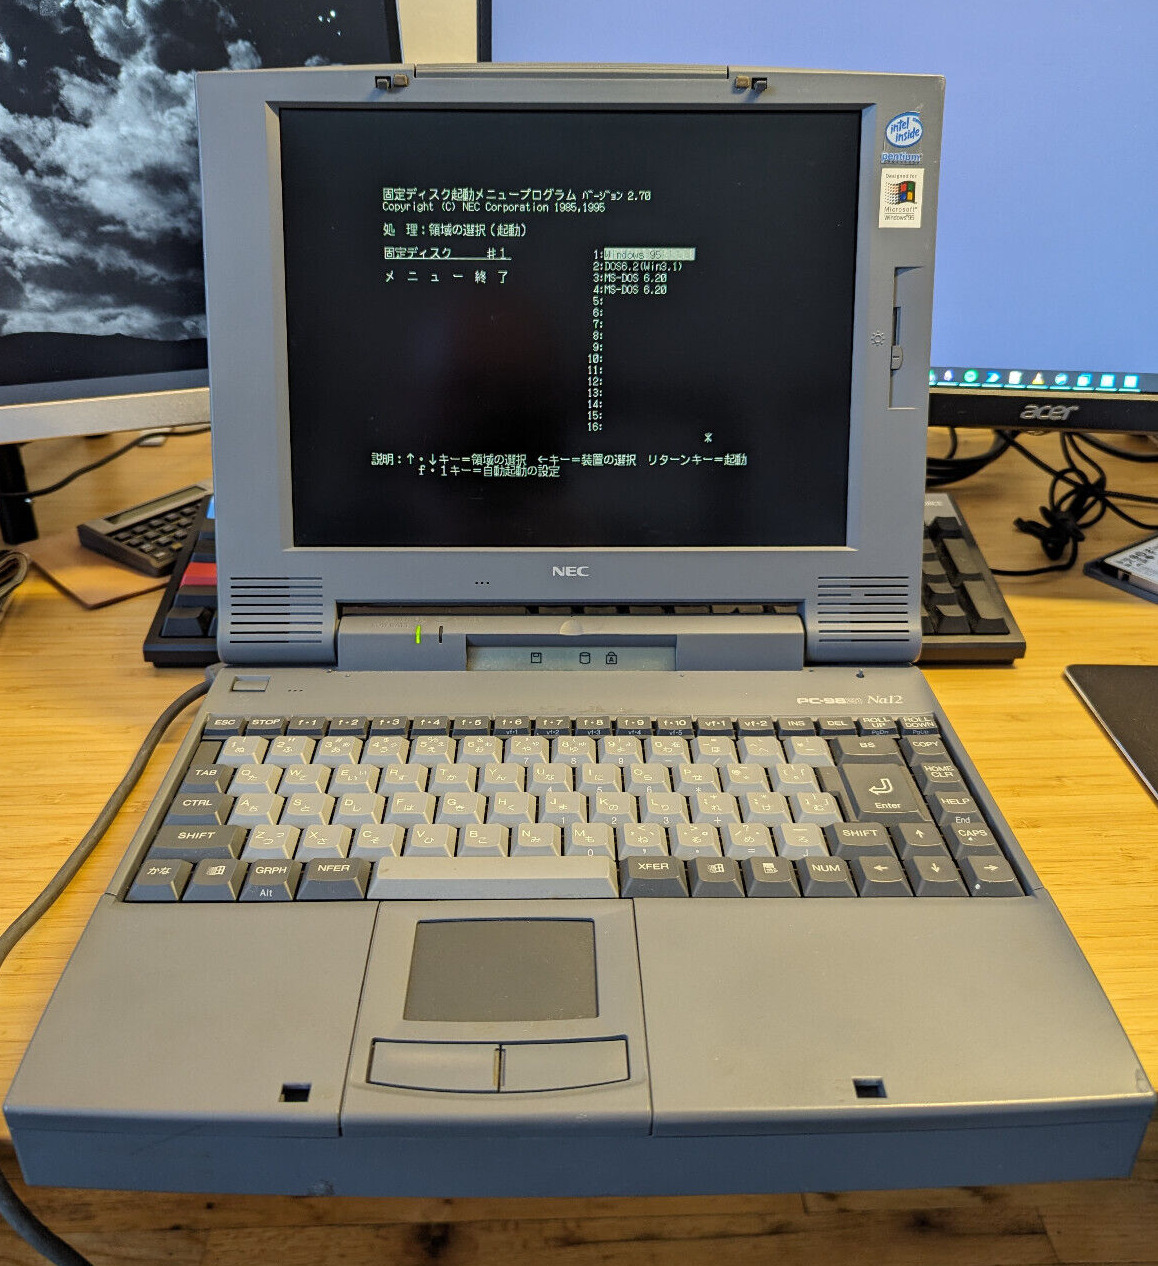 NEC 98NOTE Lavie PC-9821Na12/S10F Vintage PC-98 Laptop Pentium 120MHz Windows 95